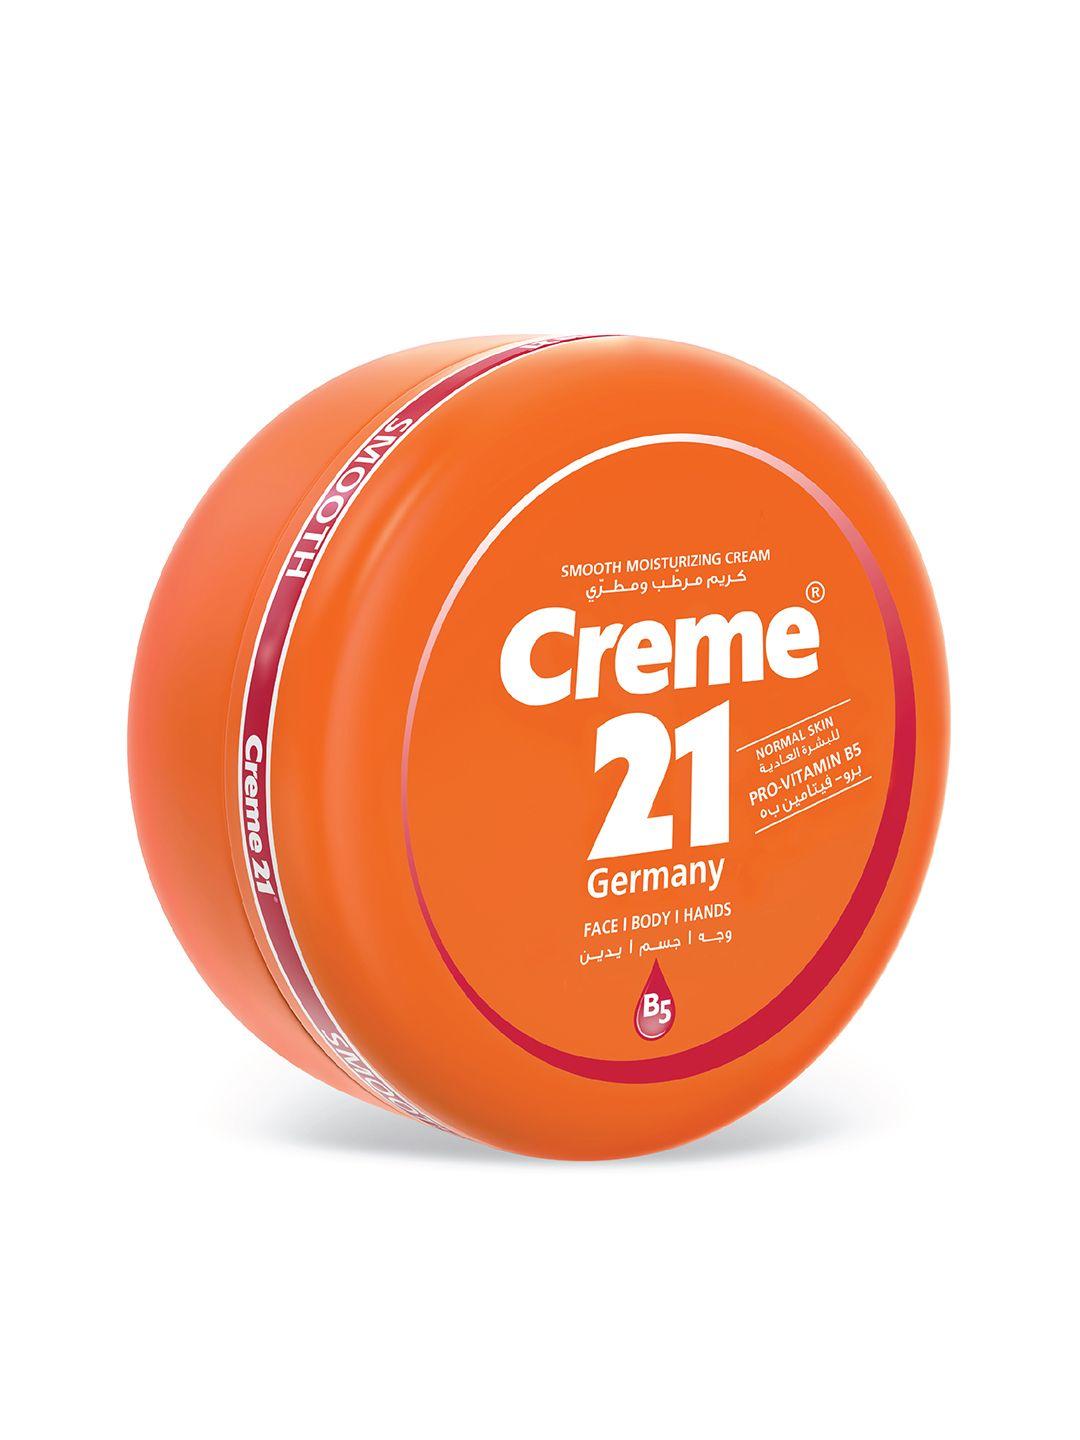 crme 21 smooth moisturizer cream with sweet almond oil - 250 ml